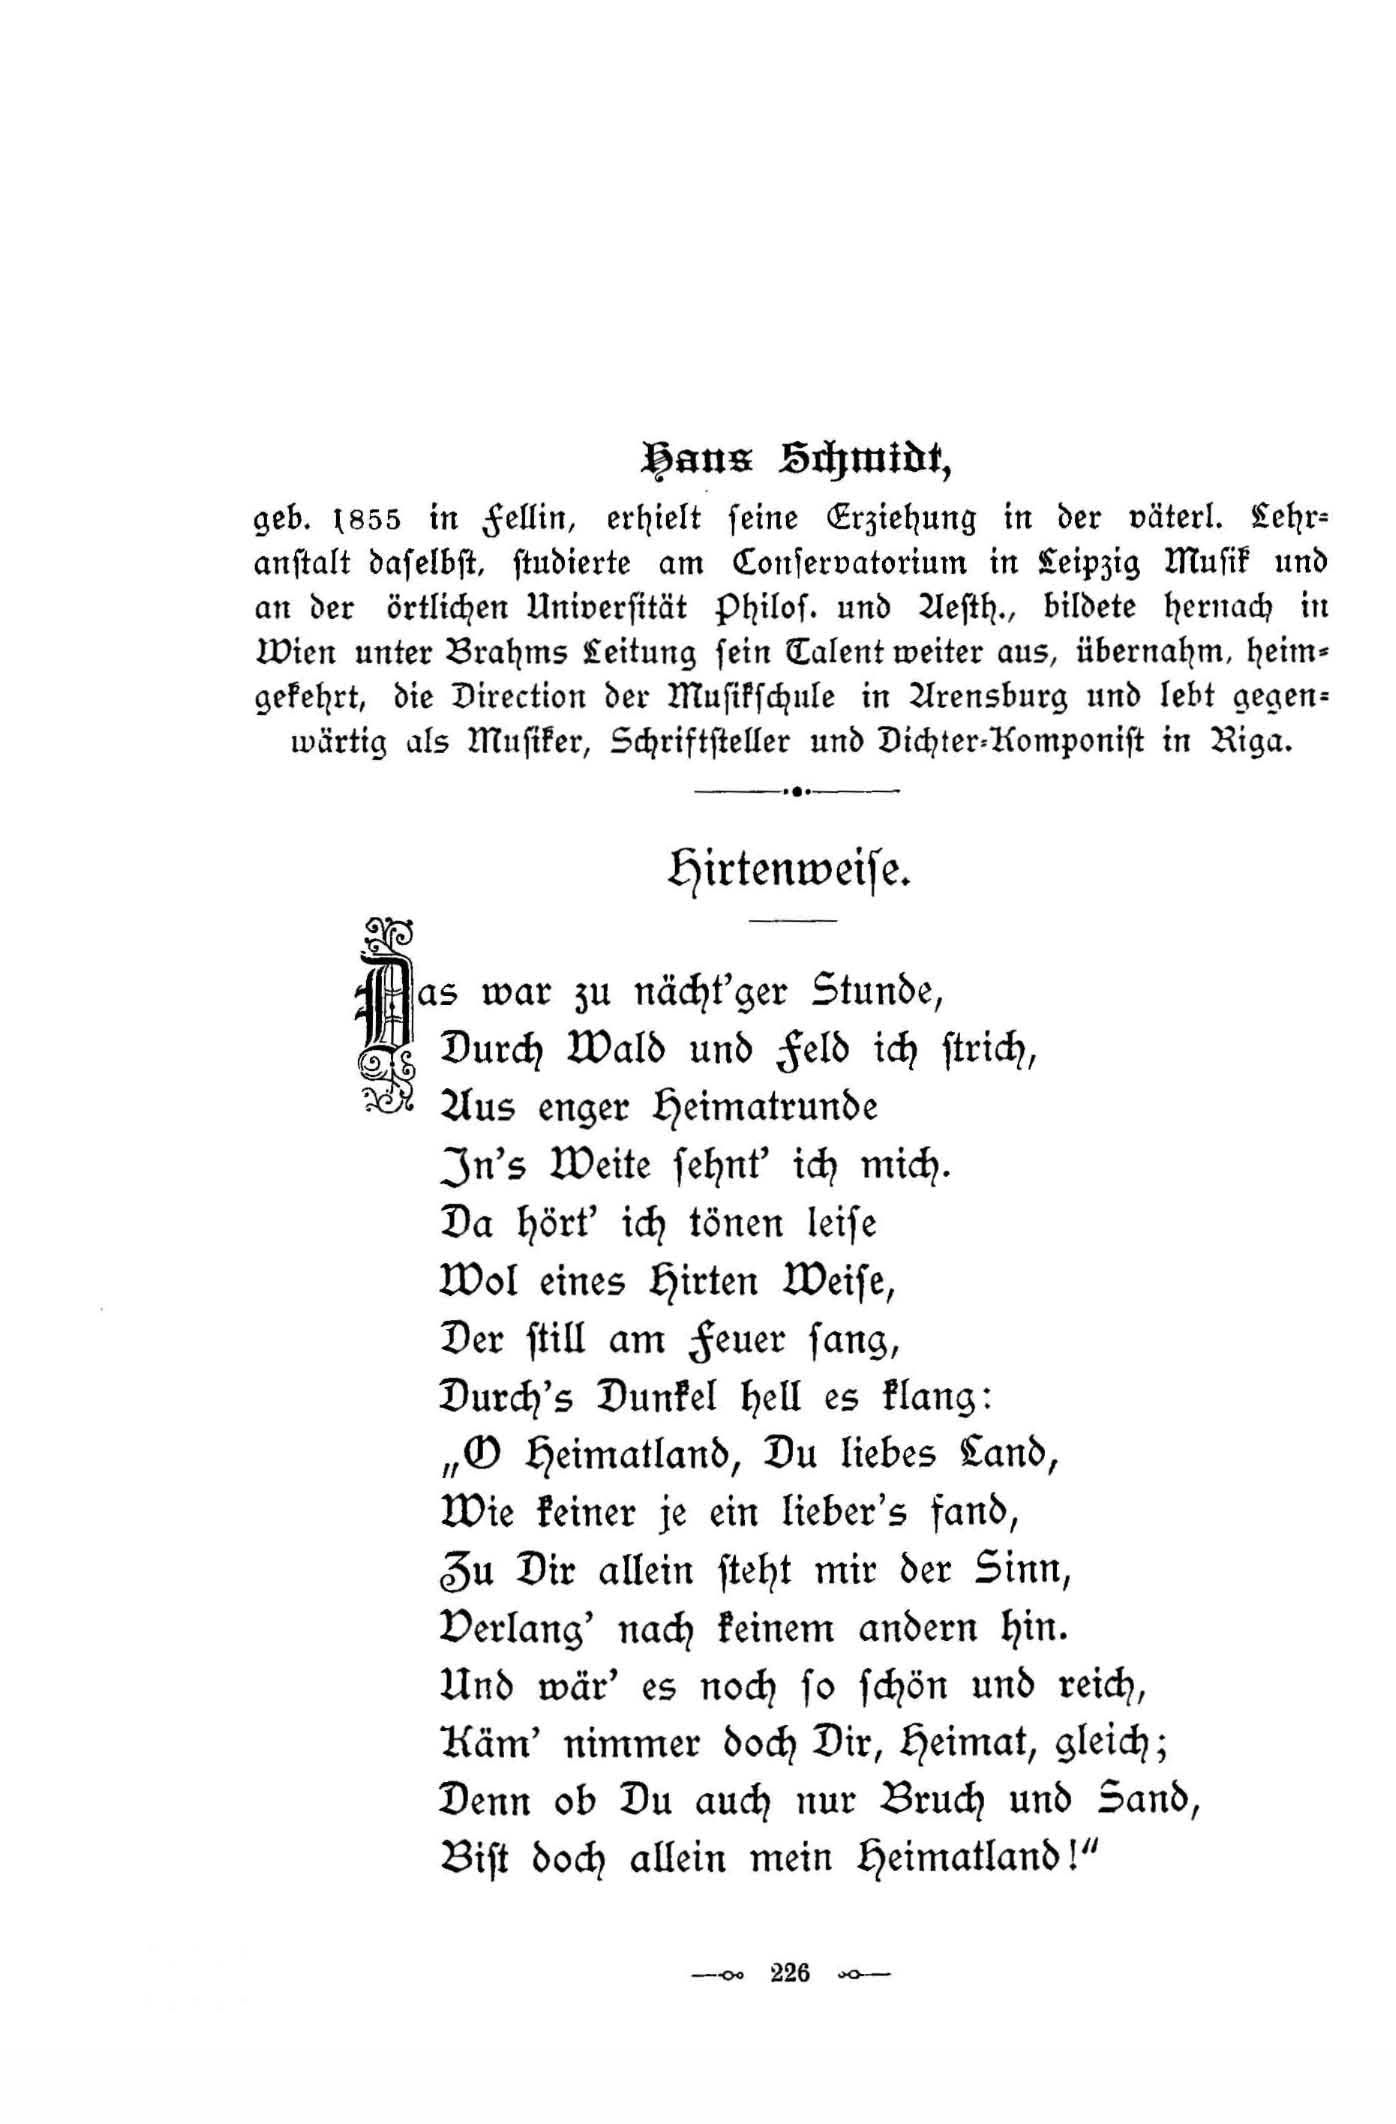 Hirtenweise (1896) | 1. (226) Основной текст